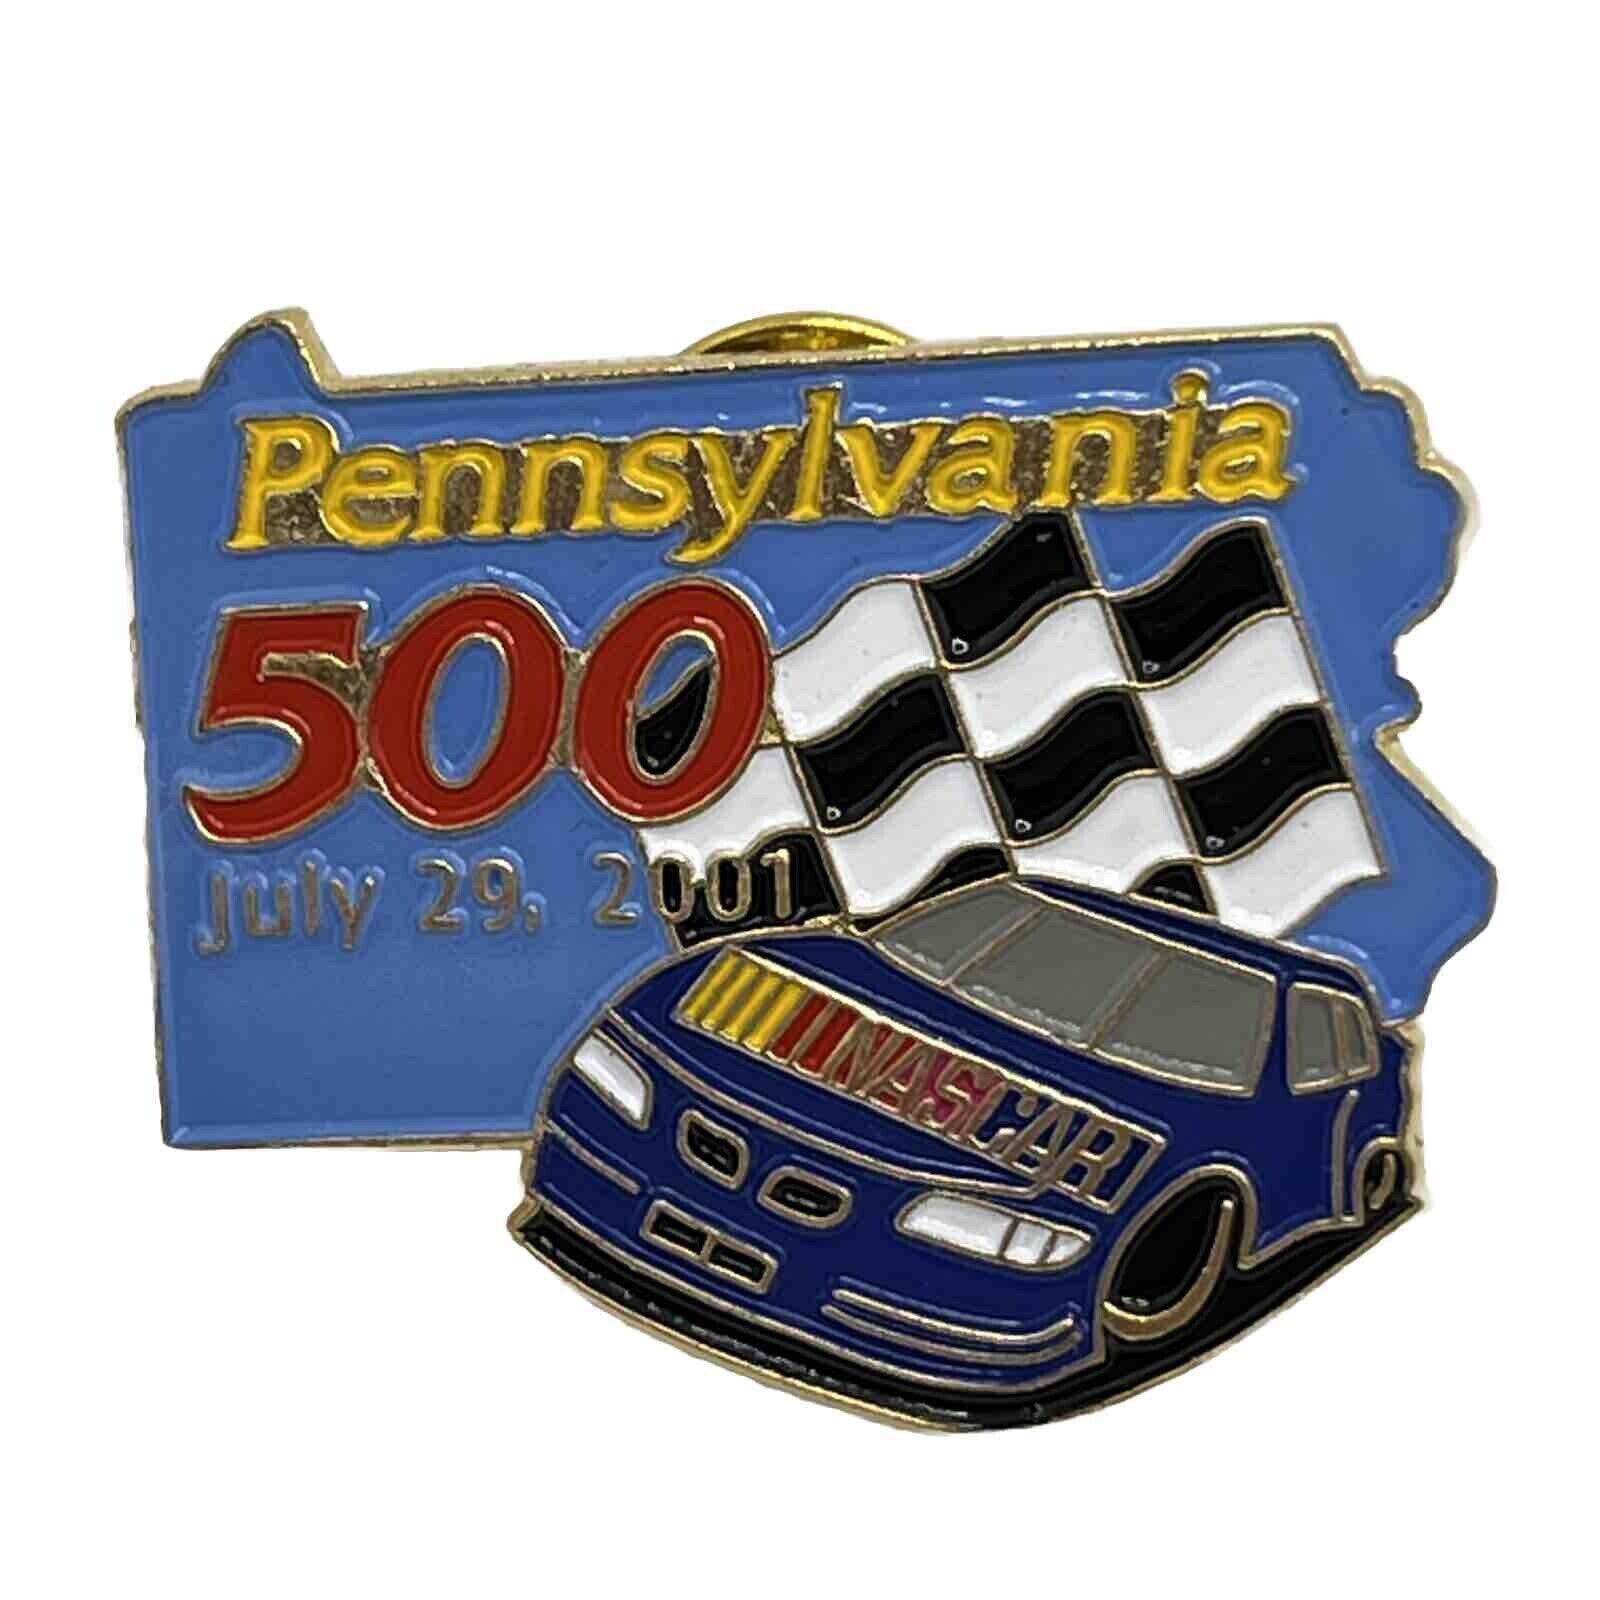 2001 Pennsylvania 500 Pocono Raceway Long Pond NASCAR Race Racing Lapel Hat Pin